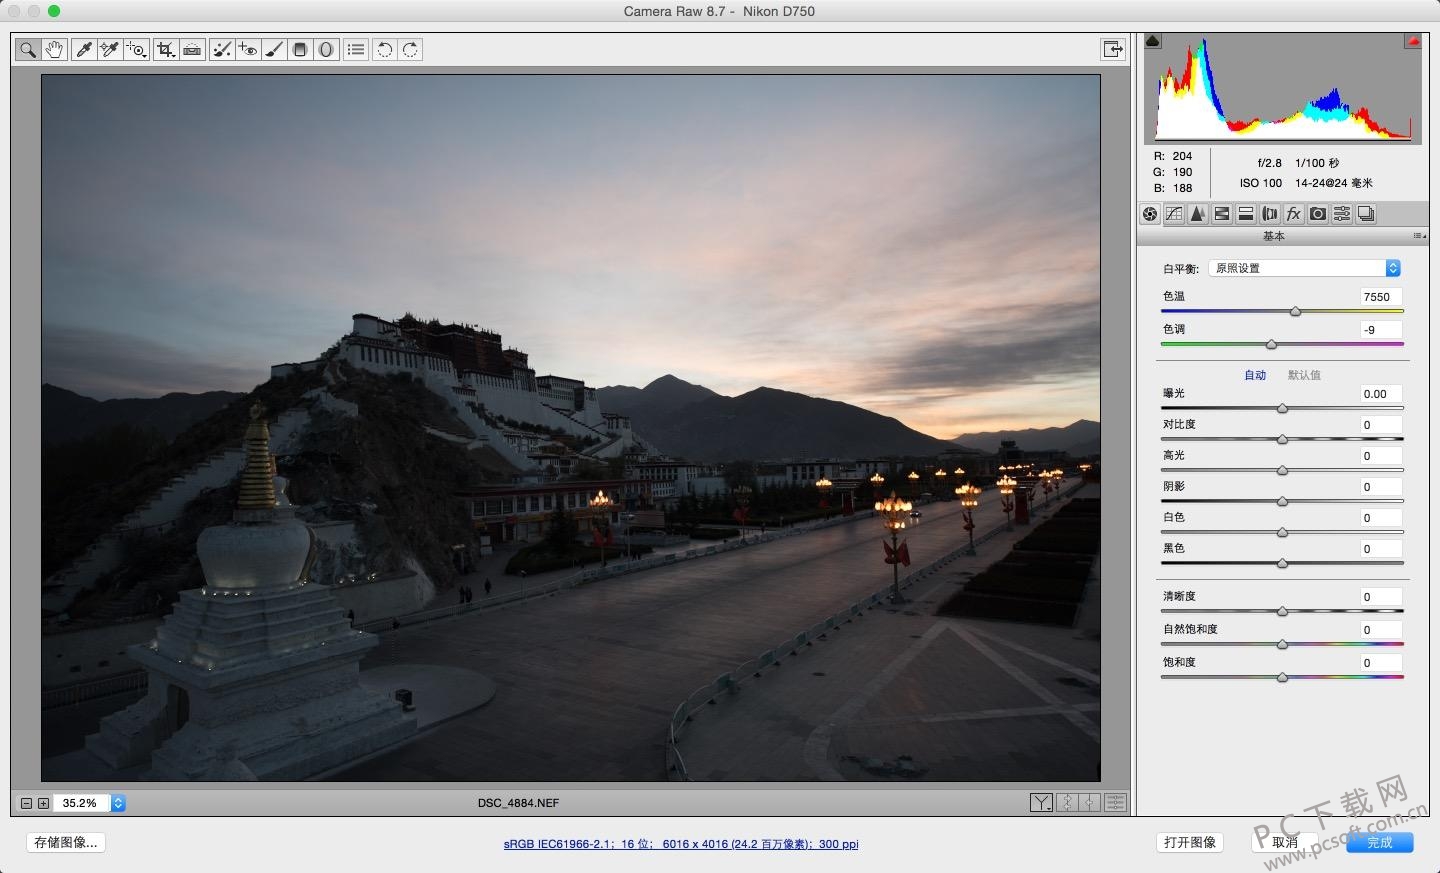 instal the last version for apple Adobe Camera Raw 16.0